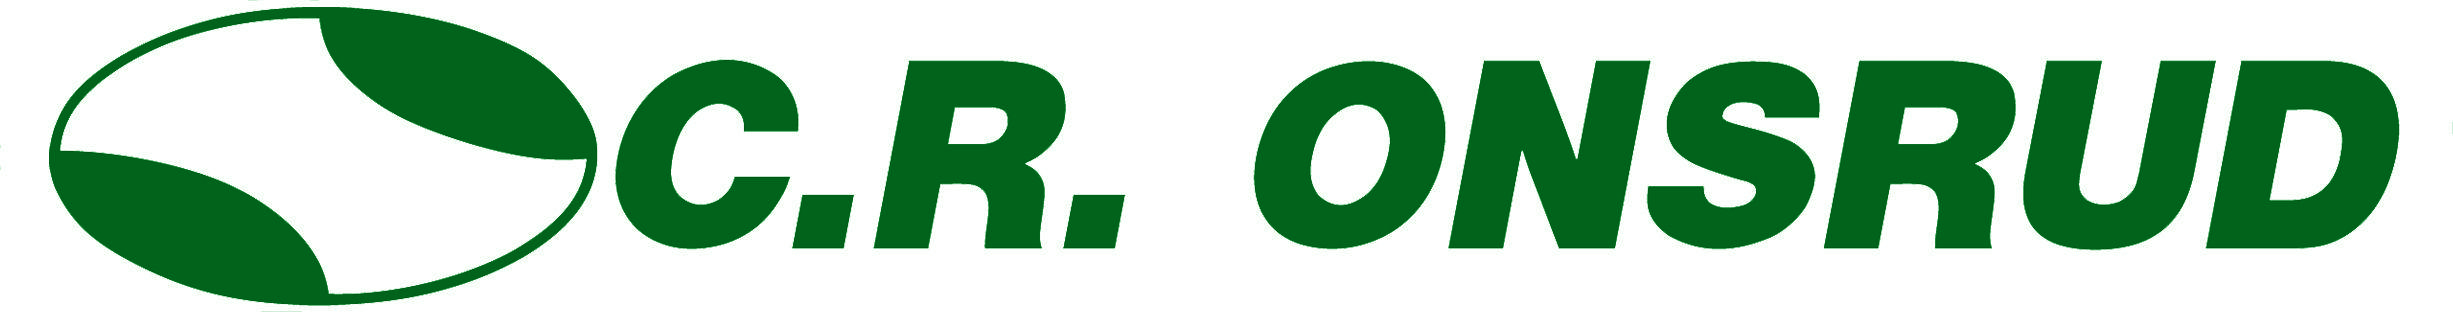 Onsrud Logo - C.R Onsrud Technology Days 2014 Machinery Inc